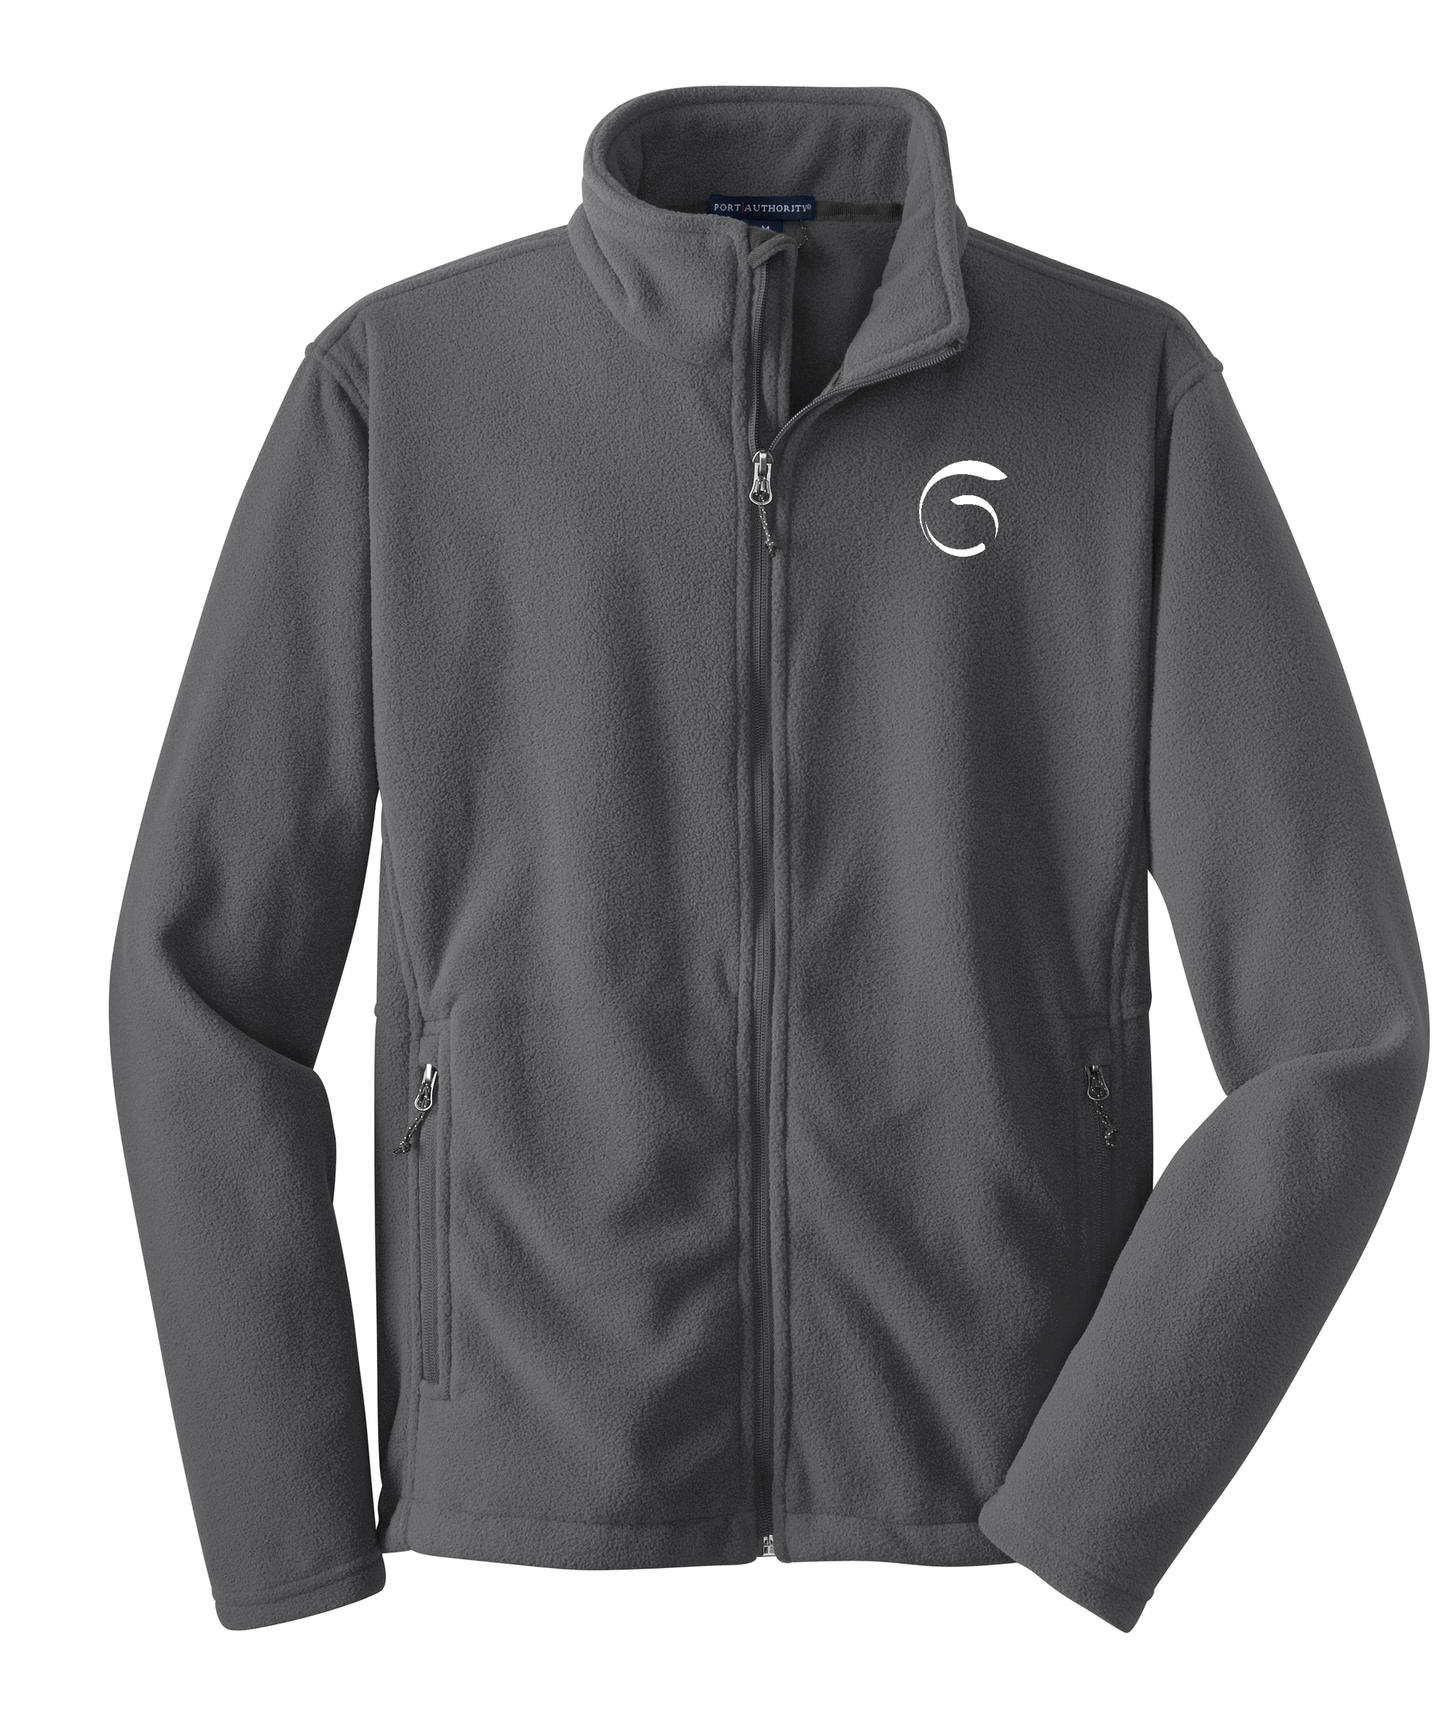 Port Authority® Value Fleece Jacket (Add'l Color Options)